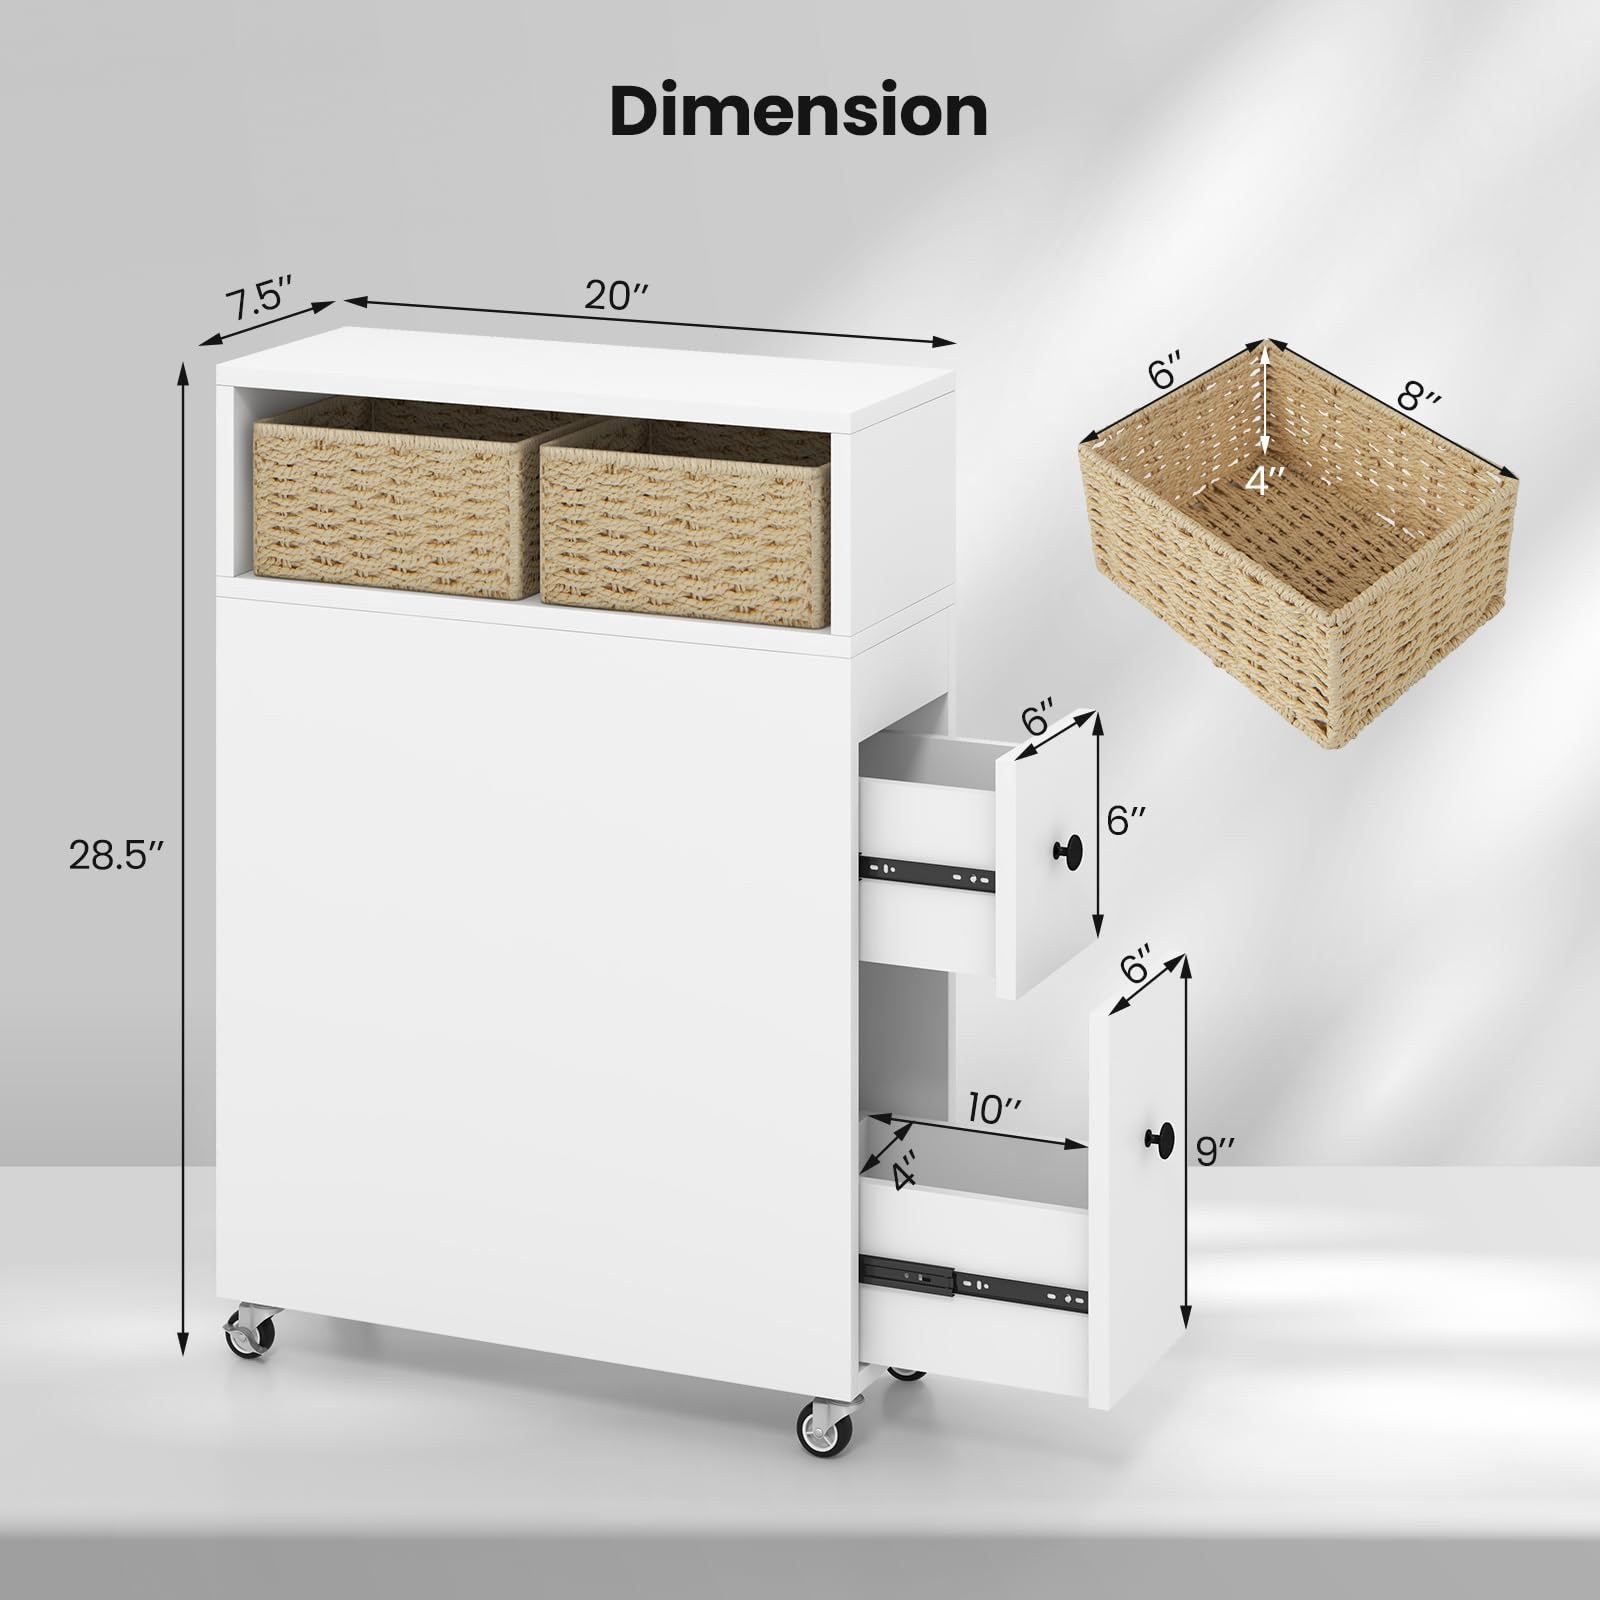 Giantex Small Bathroom Storage Cabinet - Slim Bathroom Organizer with Wheels, 2 Drawers, 2 Baskets